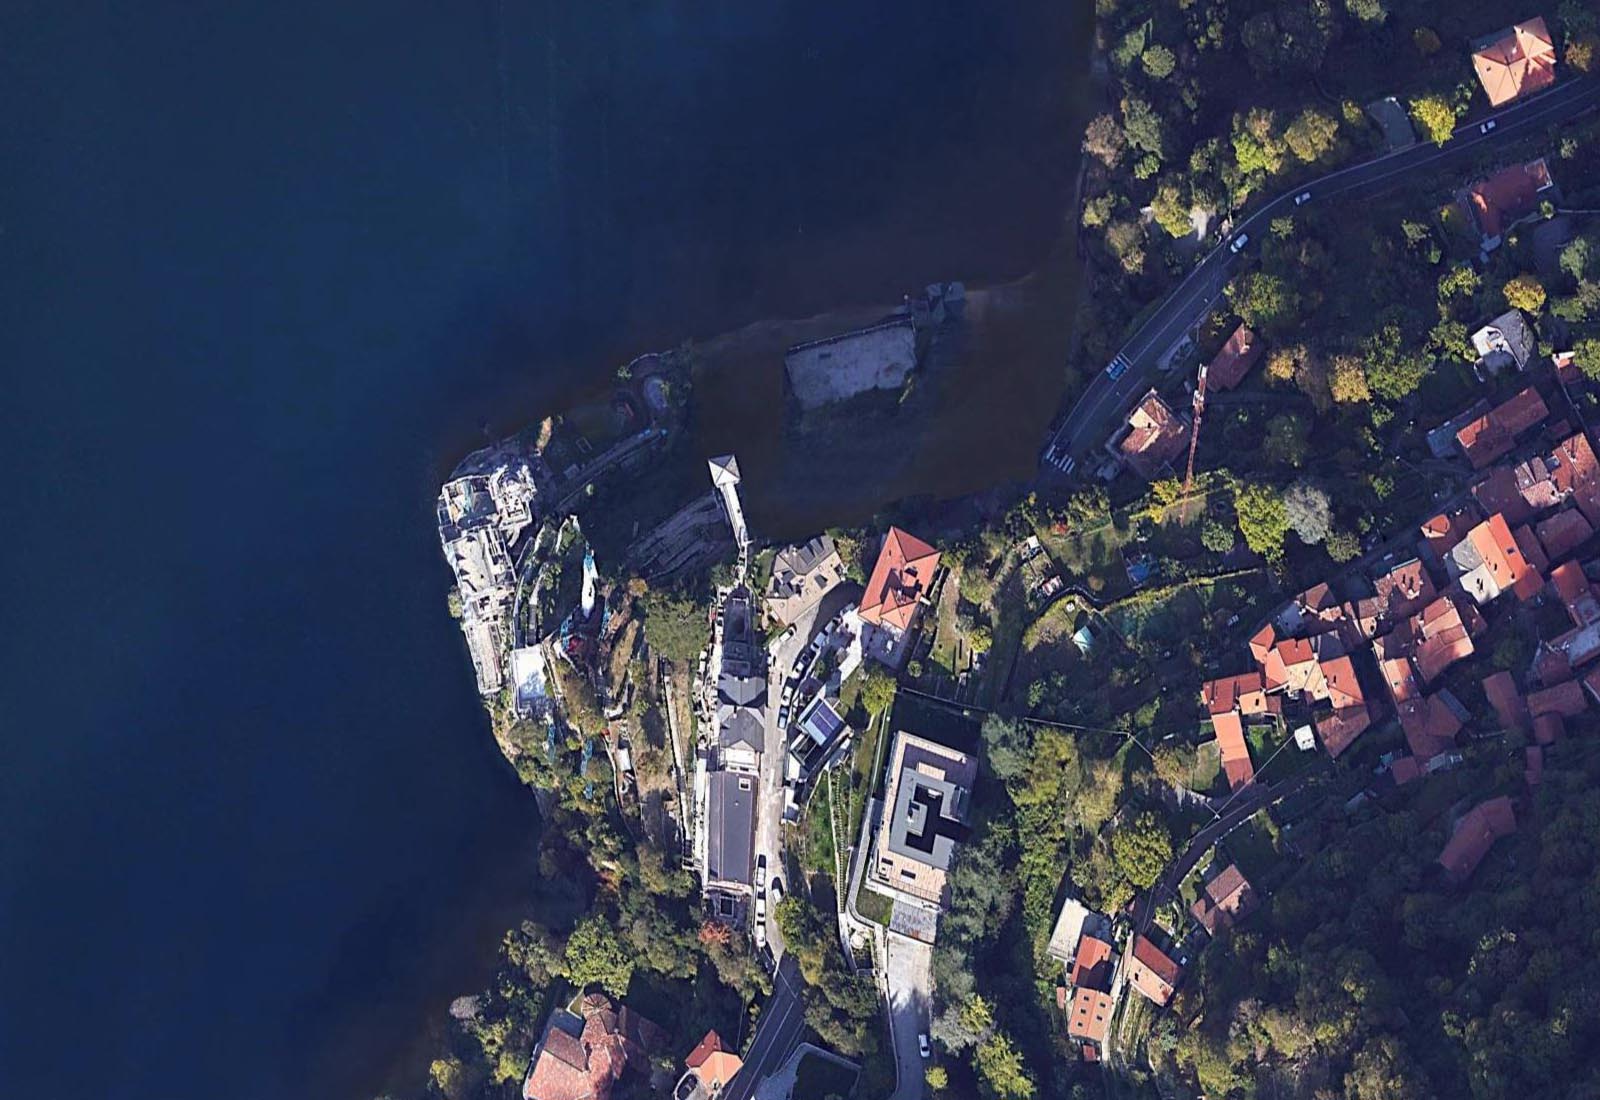 Historic villa in Blevio - Zenithal aerial view